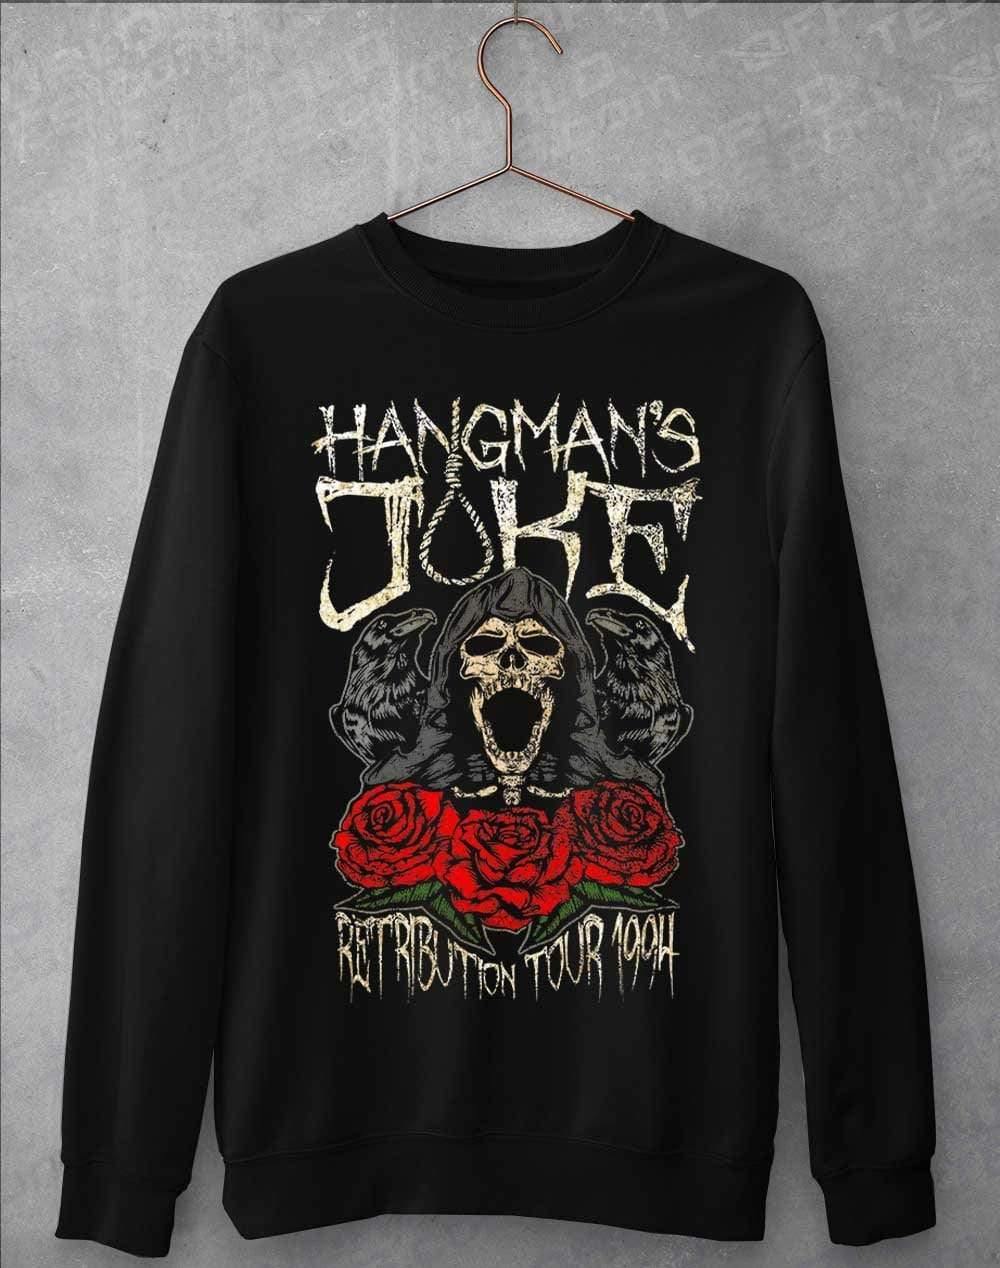 Hangman's Joke Retribution Tour 94 Sweatshirt S / Jet Black  - Off World Tees